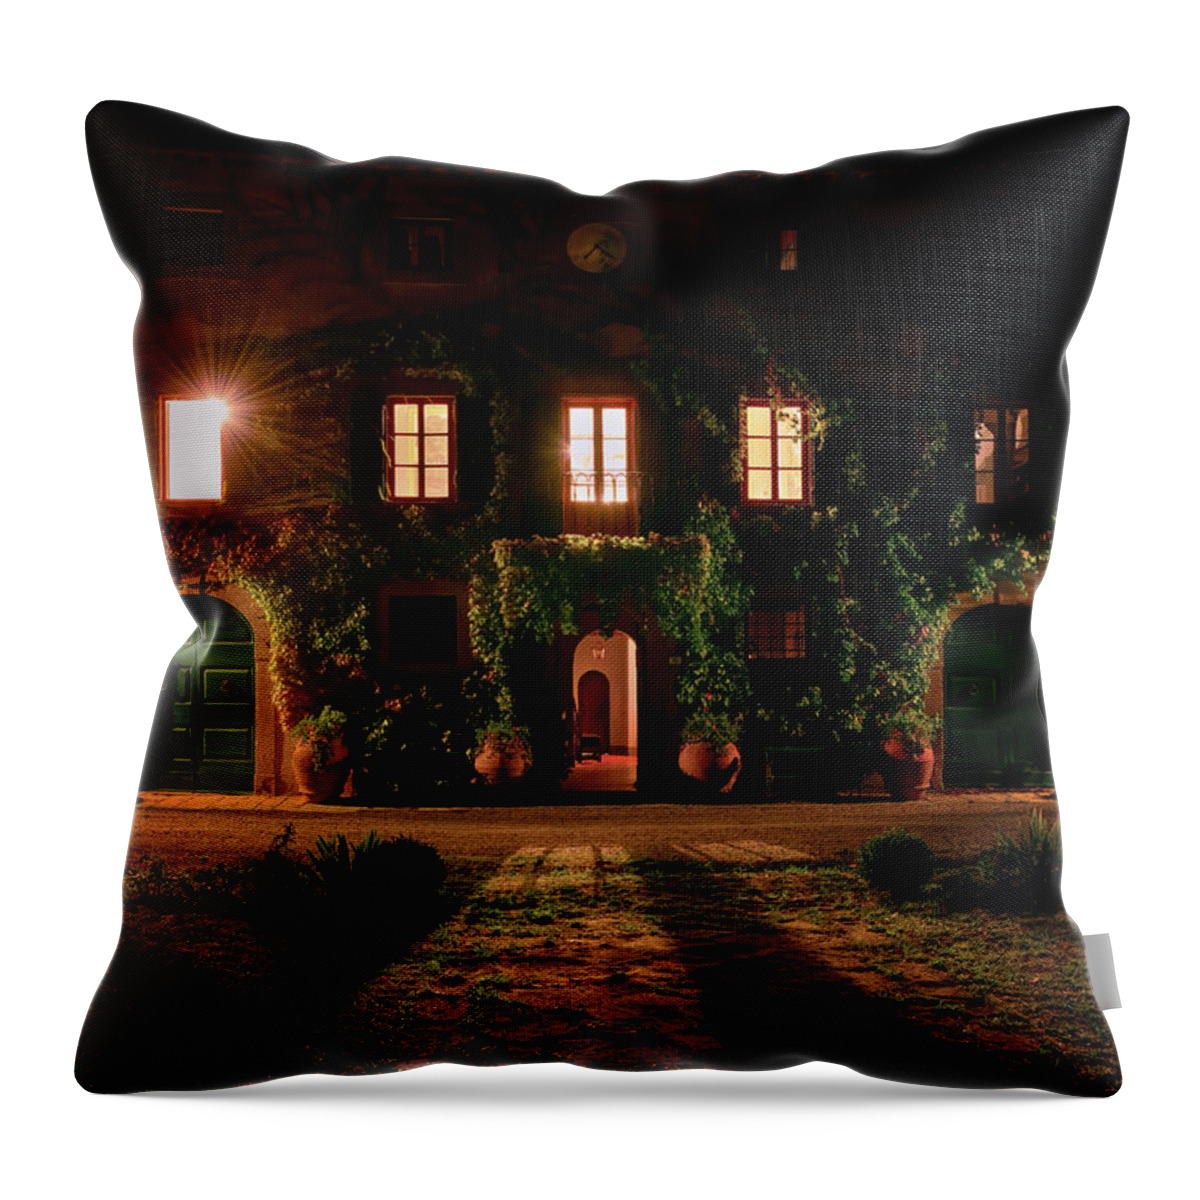 Tuscany Throw Pillow featuring the photograph Tuscany Italy Villa Facade by Joan Carroll